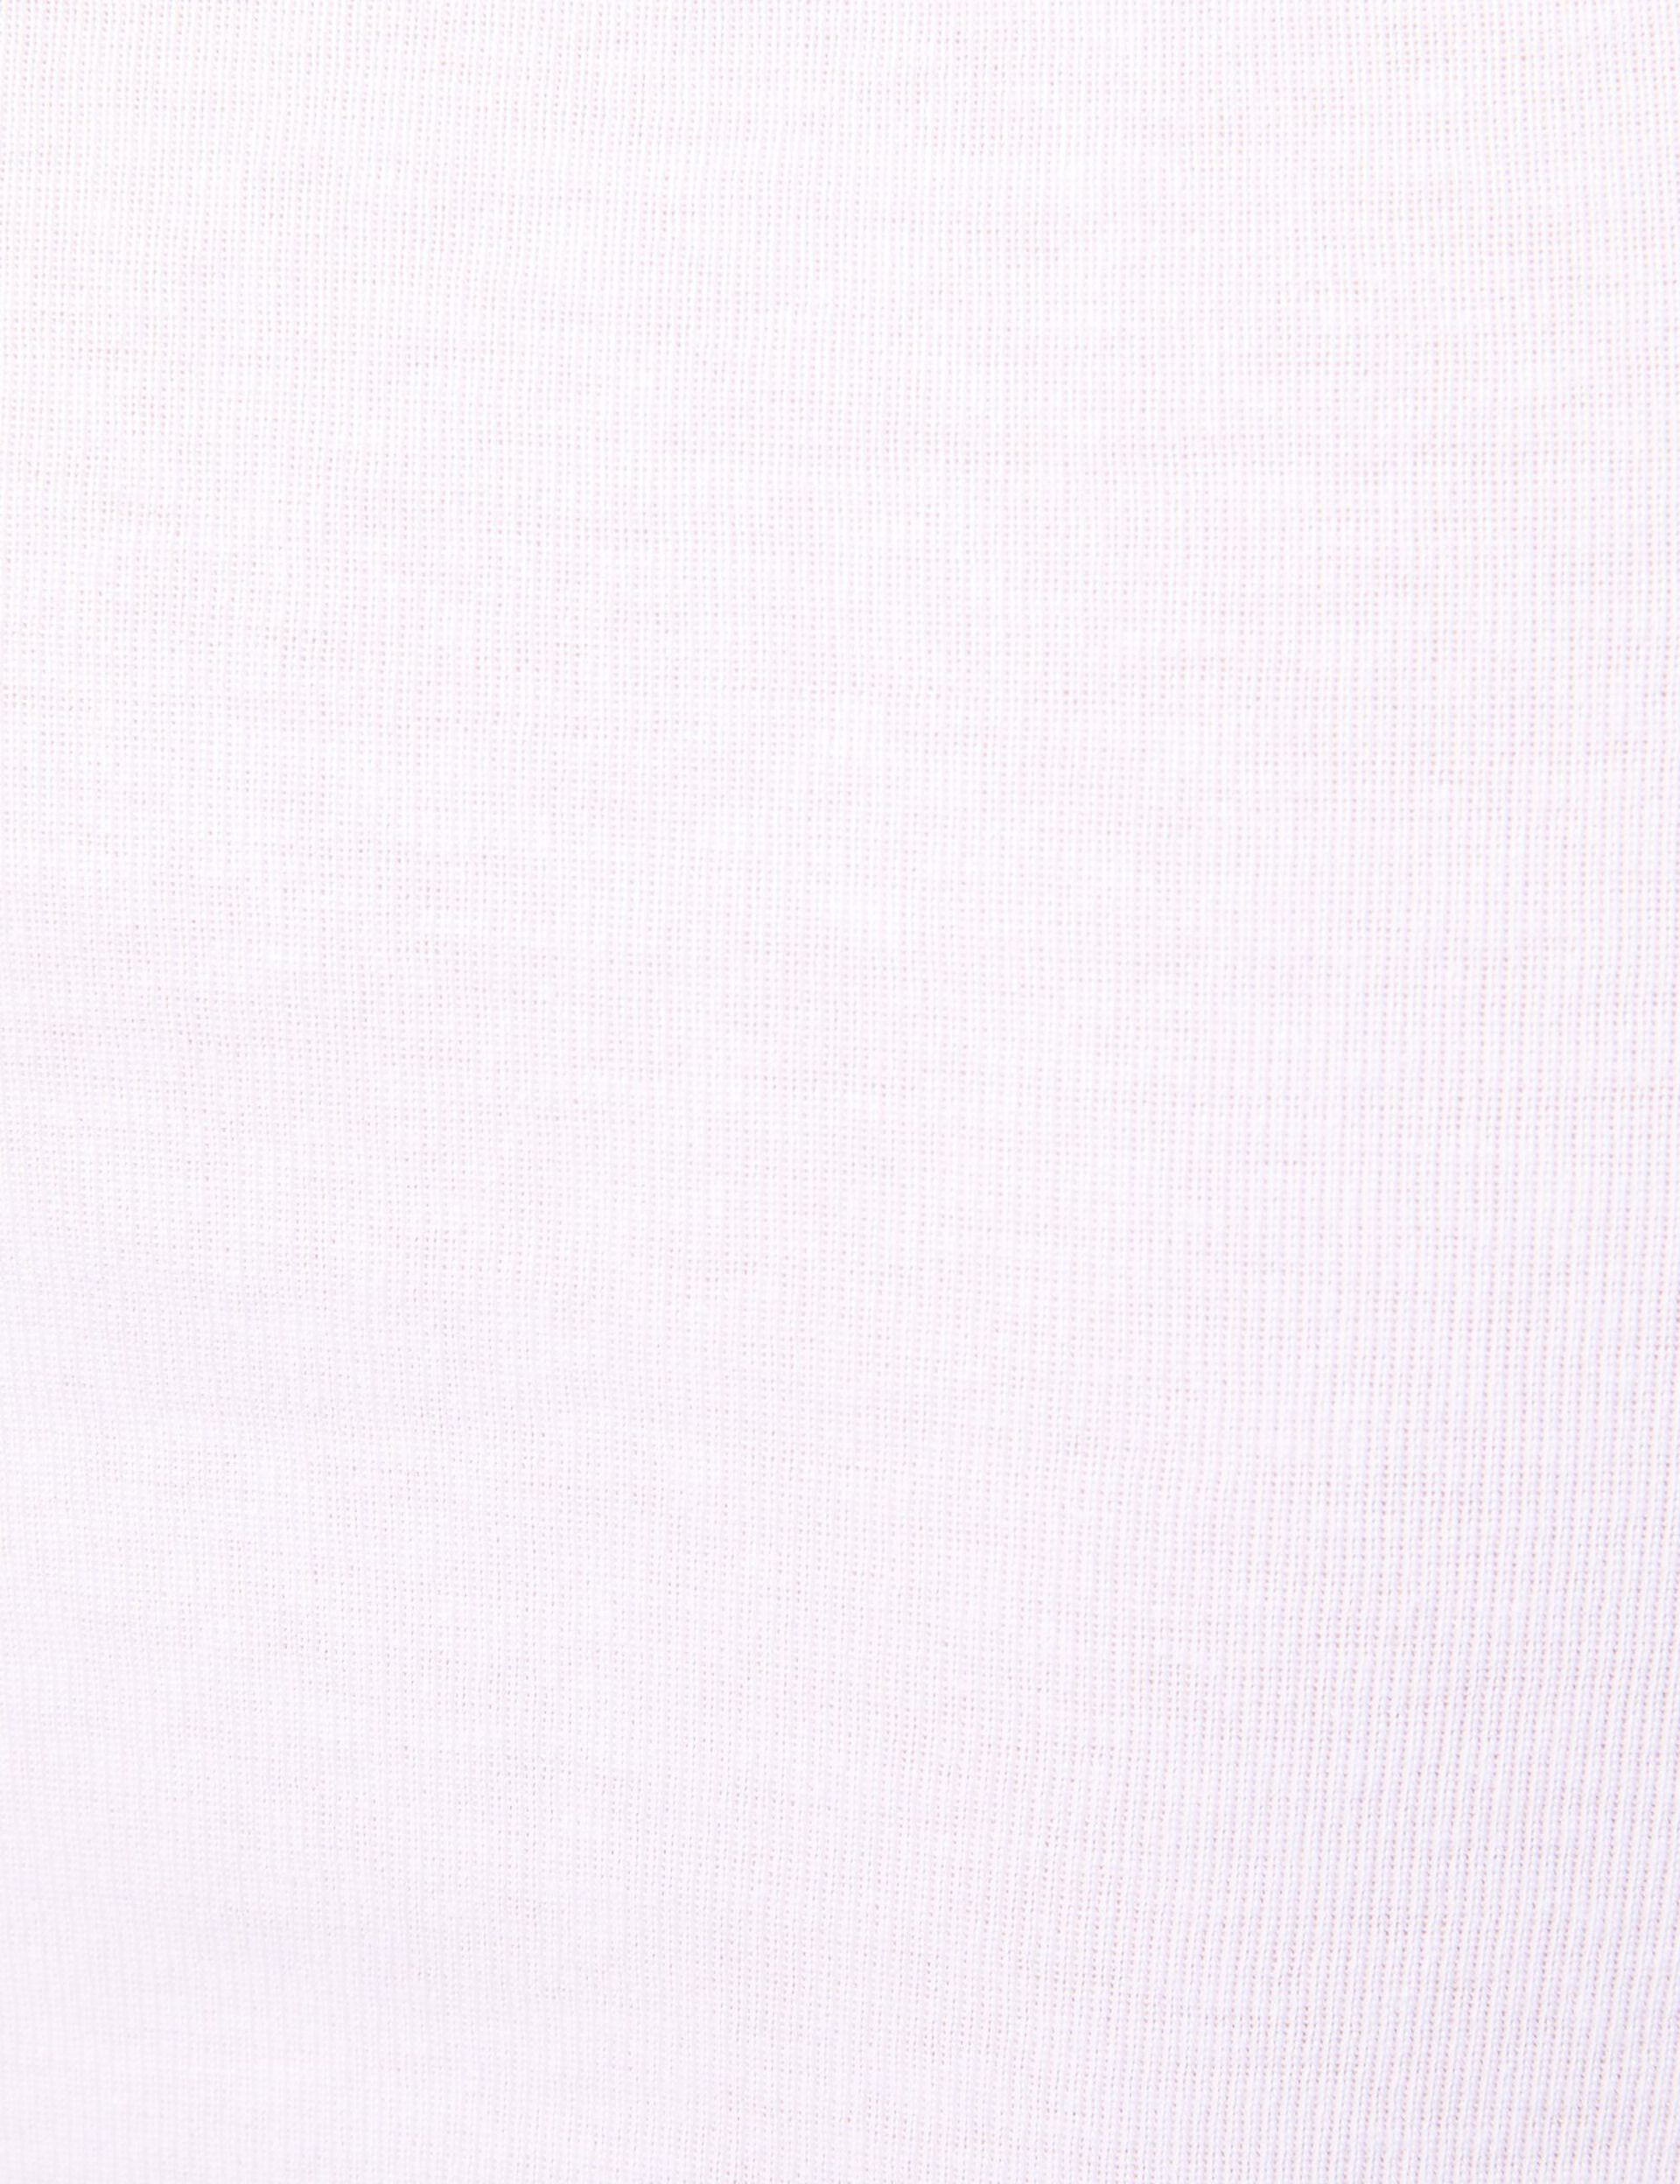 Tee-shirt blanc court col V